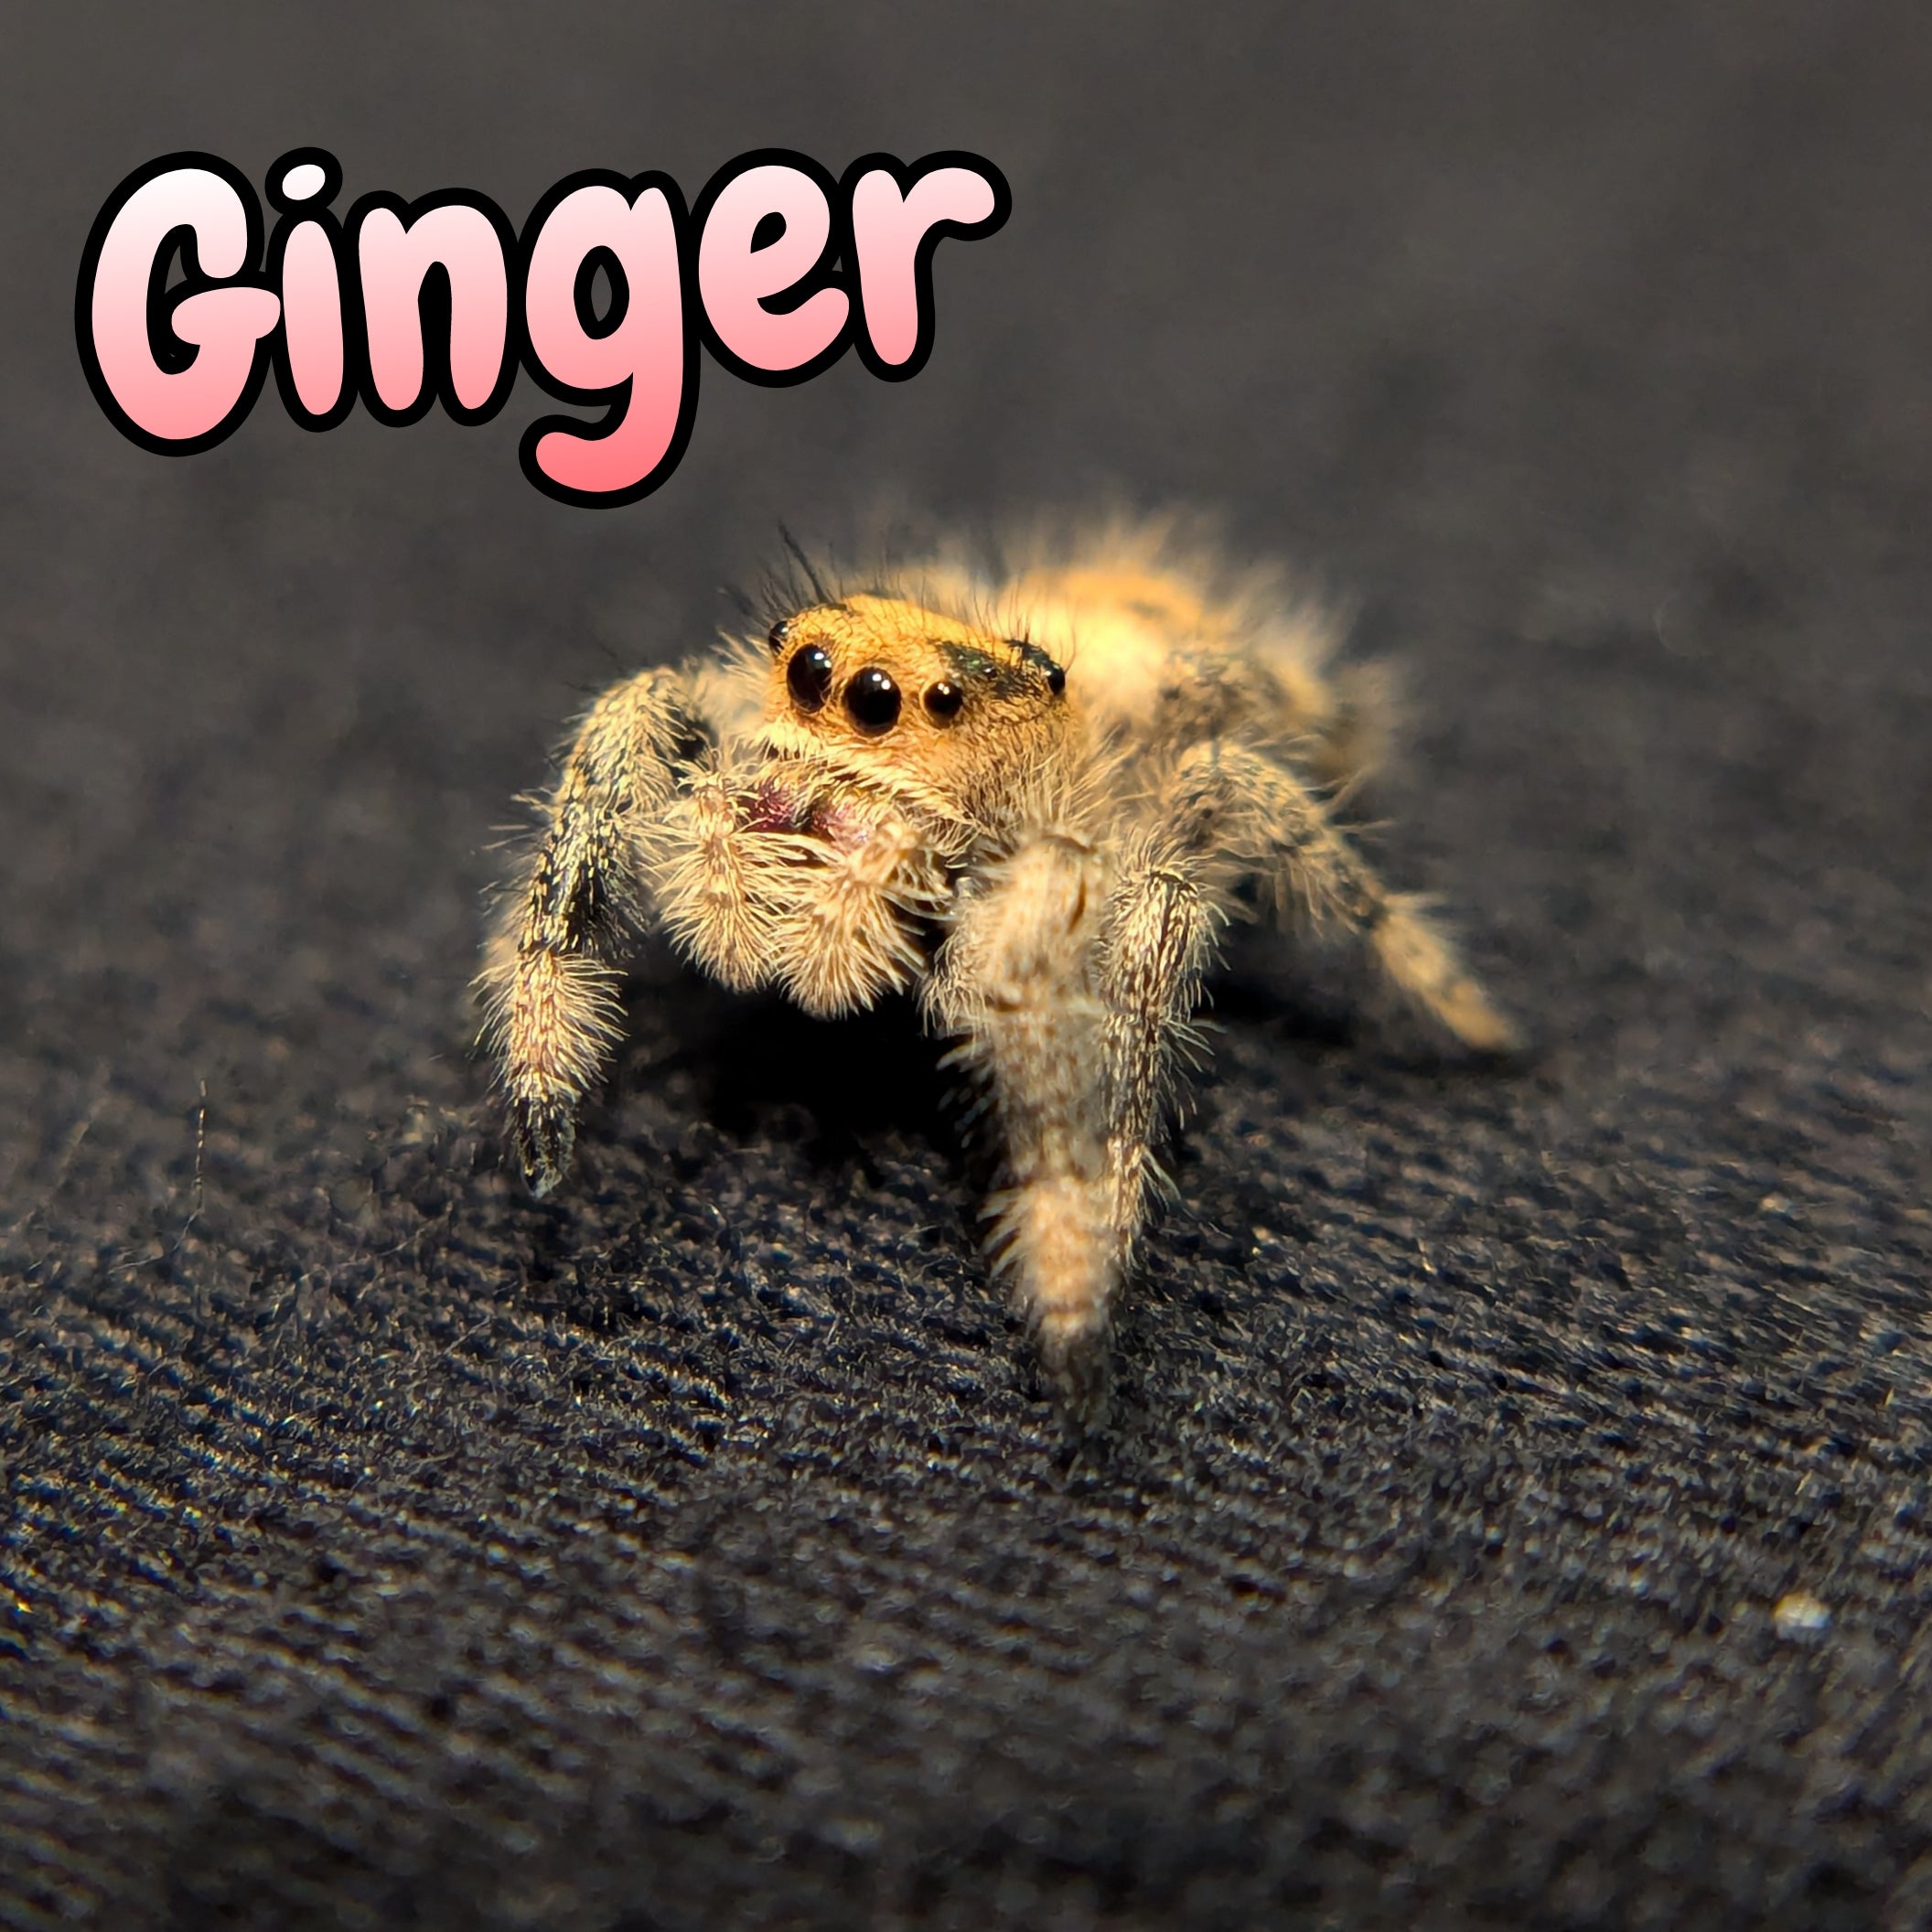 Regal Jumping Spider "Ginger"